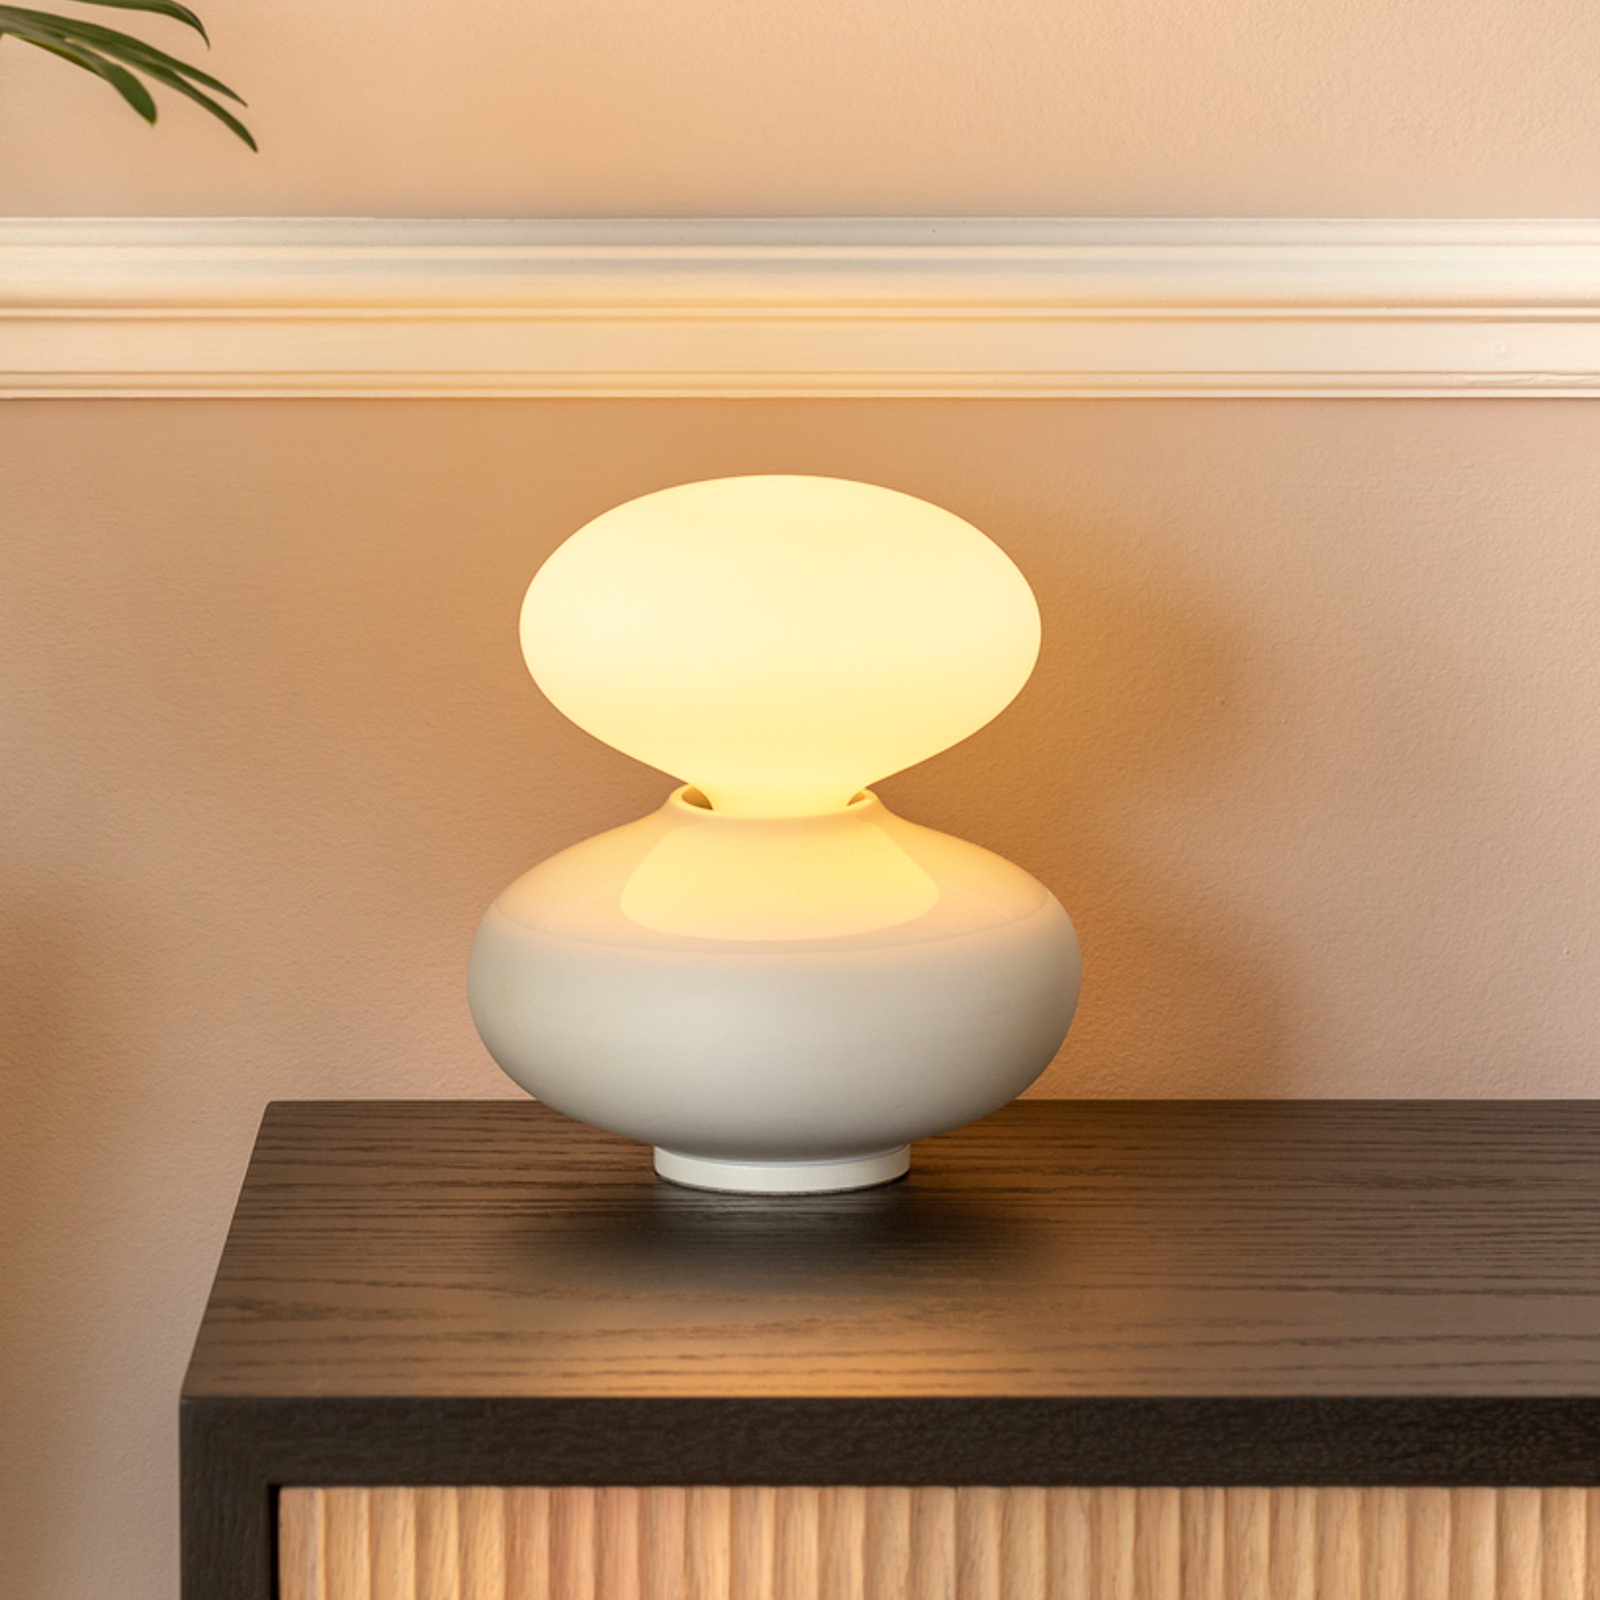 Настолна лампа Tala Reflection Oval, дизайн David Weeks